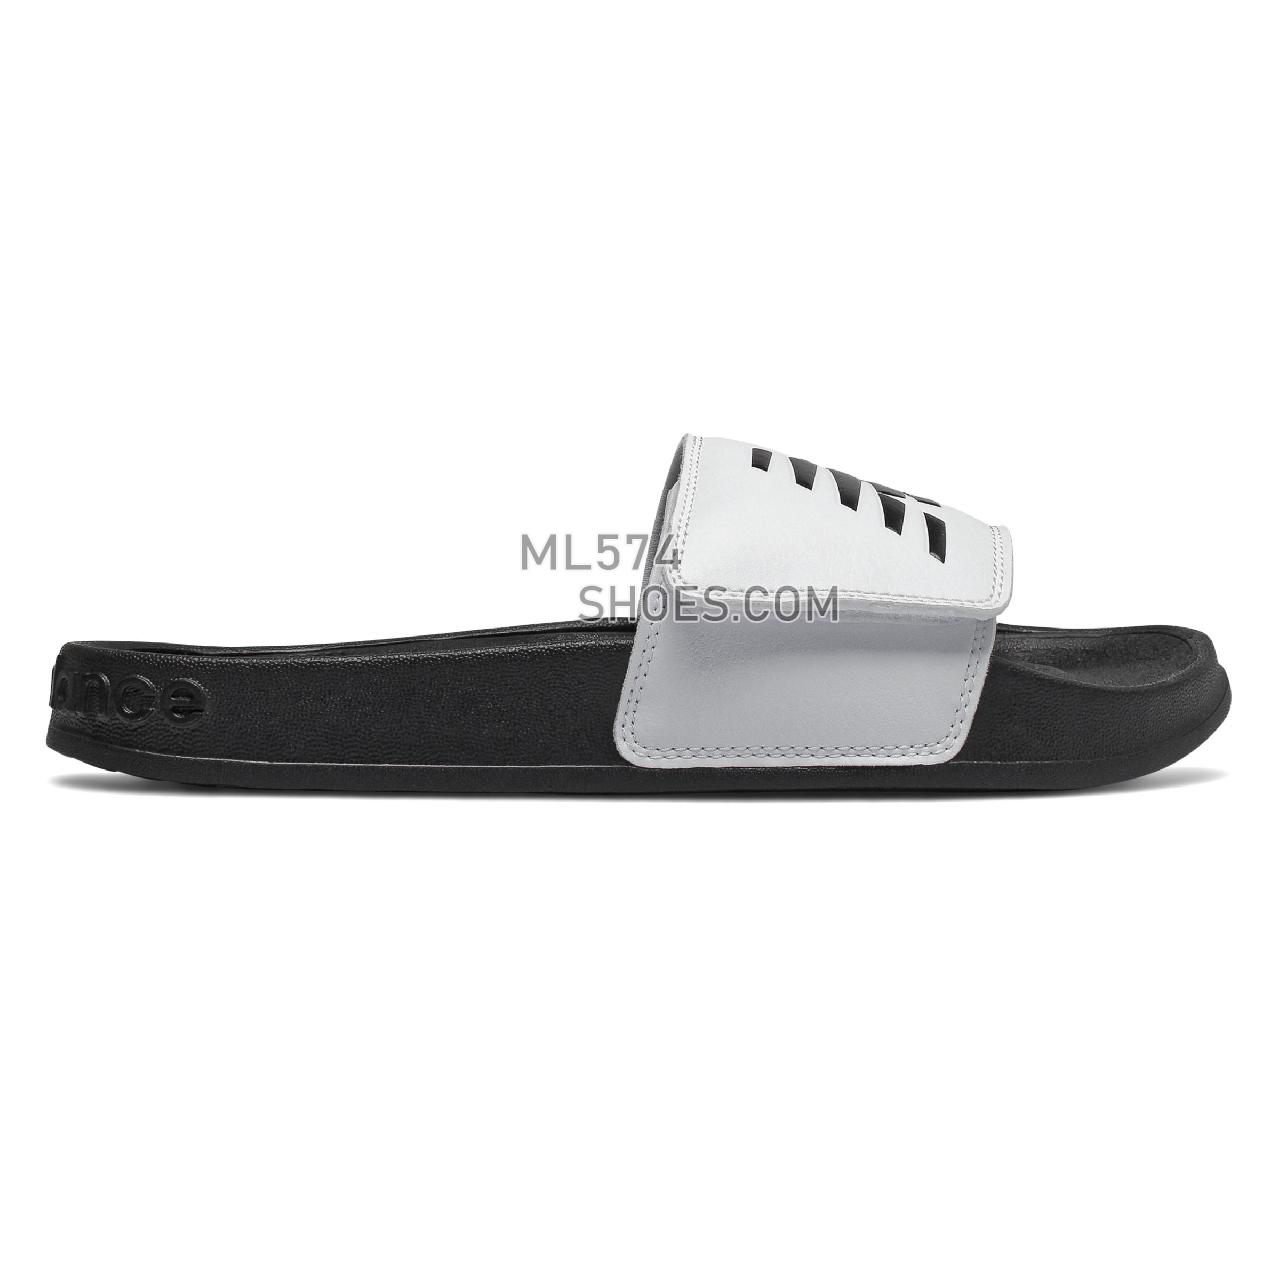 New Balance 200 Adjustable - Women's Flip Flops - White with Black - SWA200W1